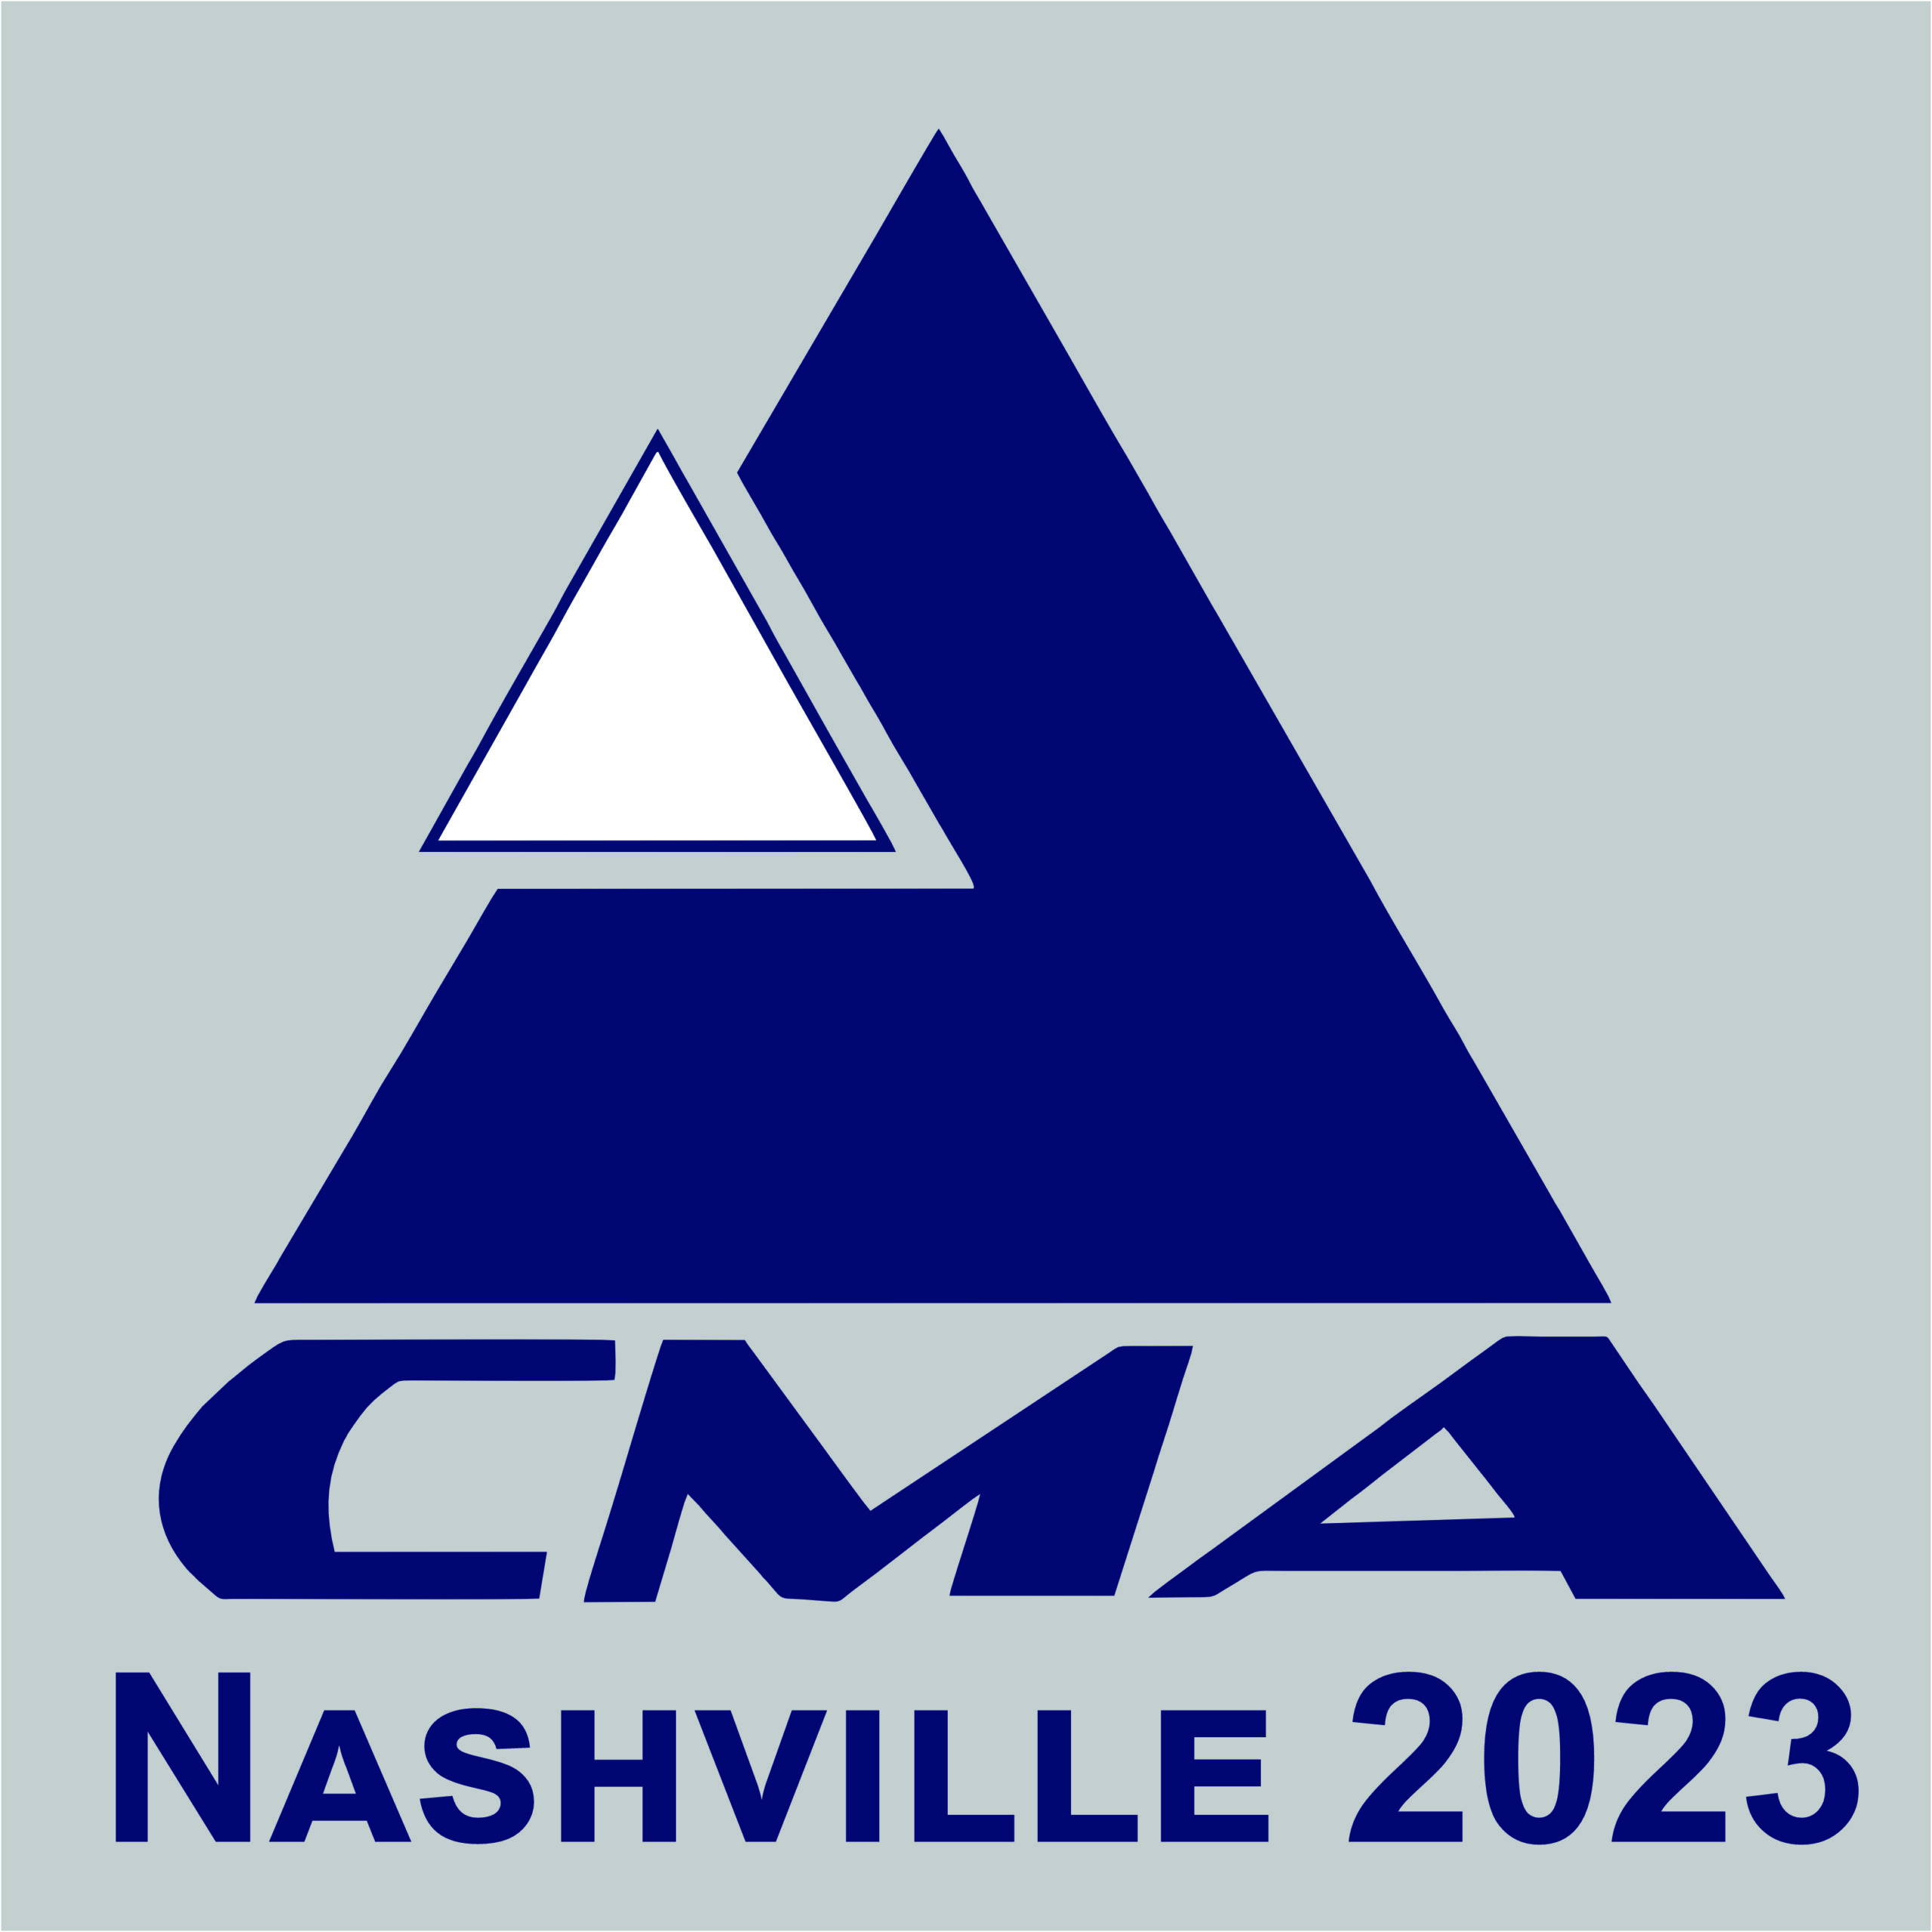 Cabinet Makers Association Nashville 2023 Special Shirt